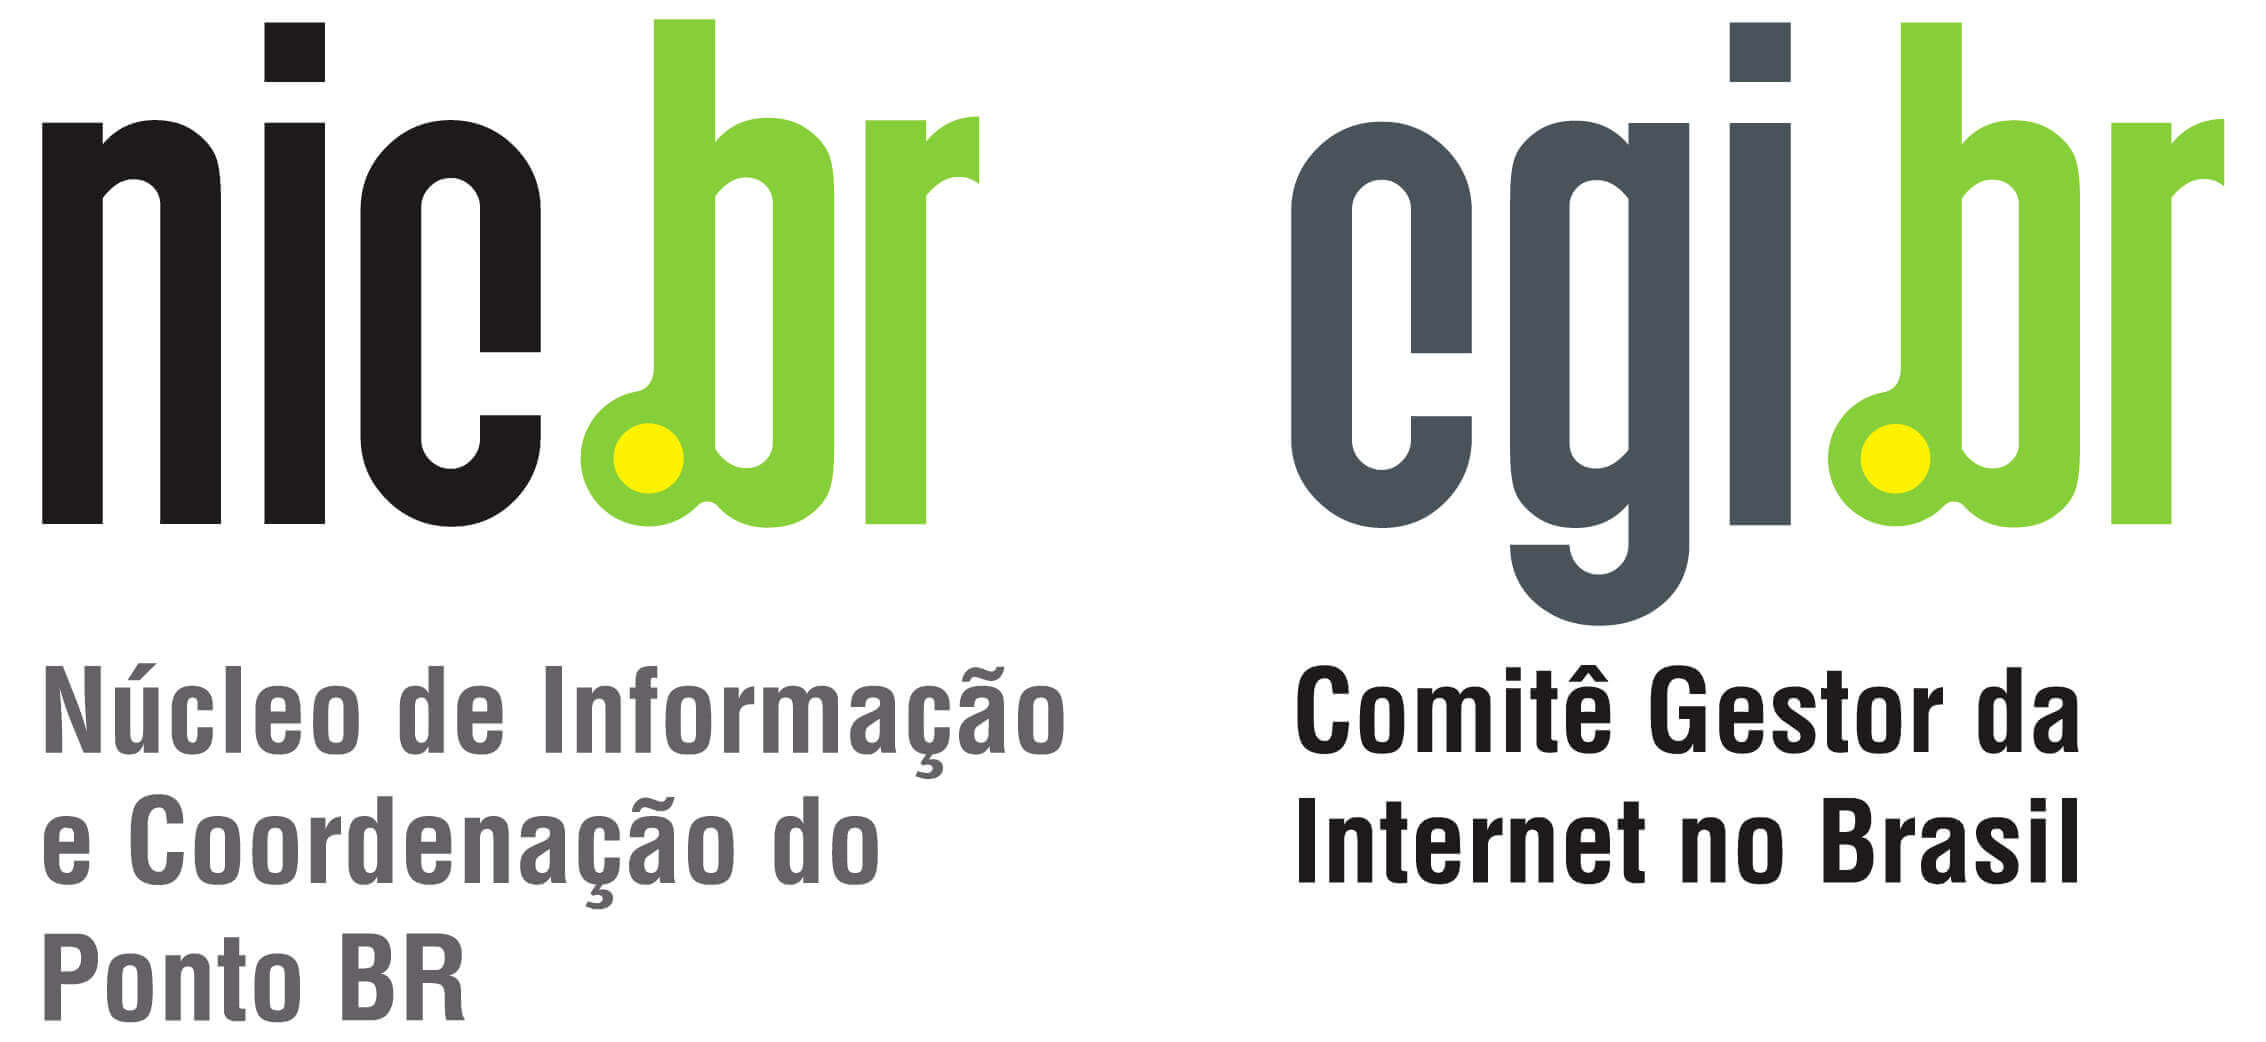 Comitê Gestor da Internet no Brasil